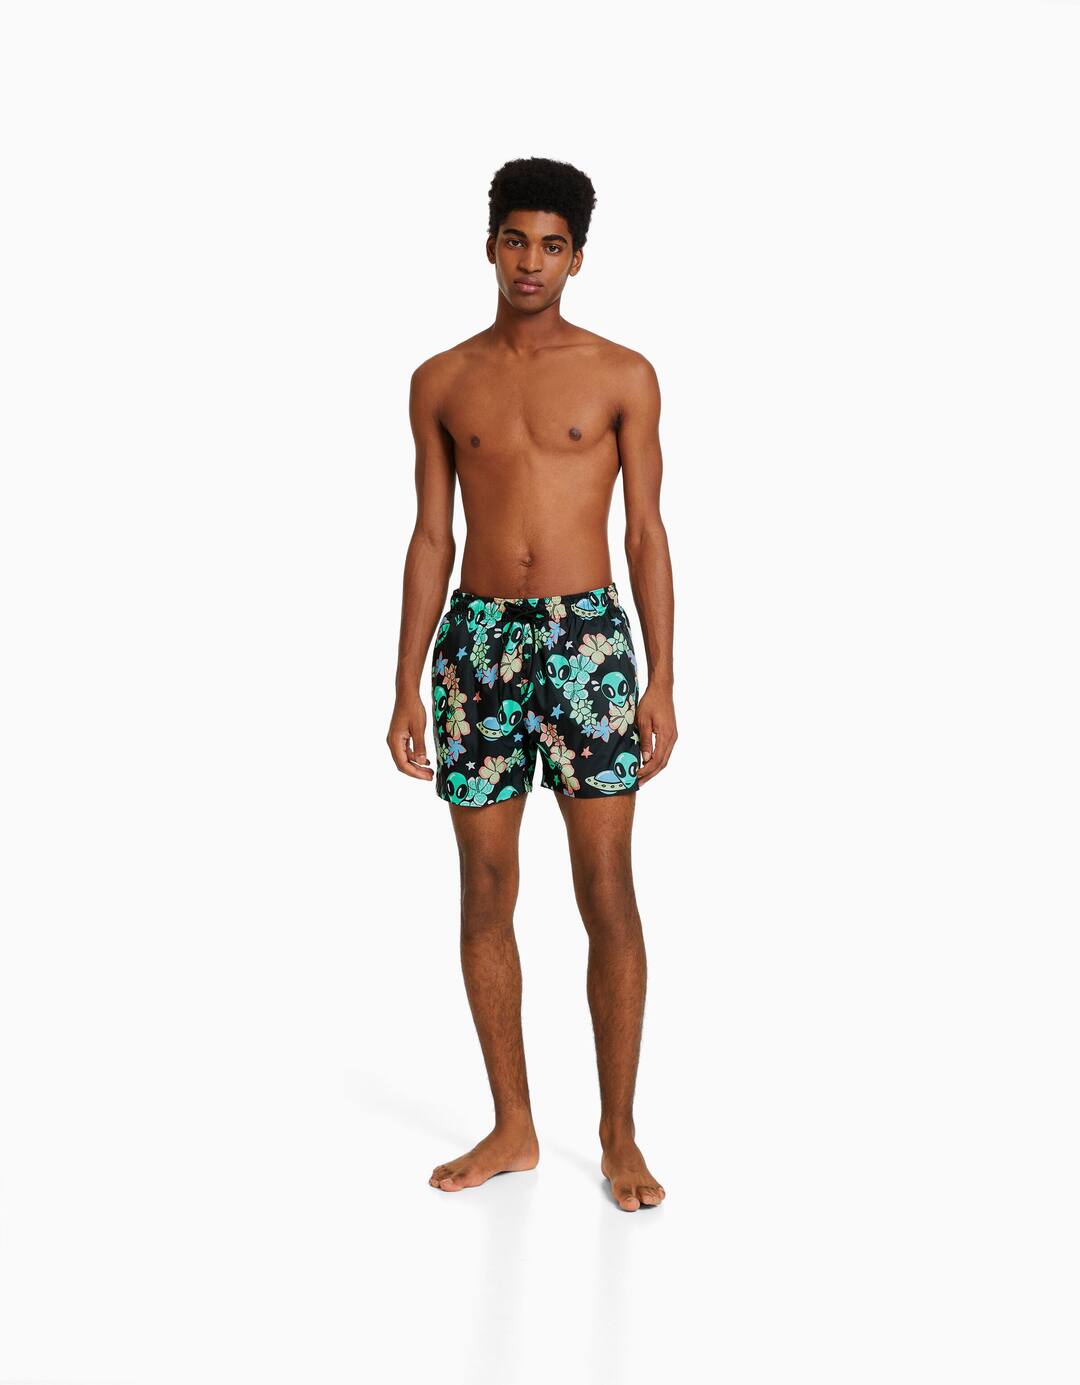 Printed swimming trunks